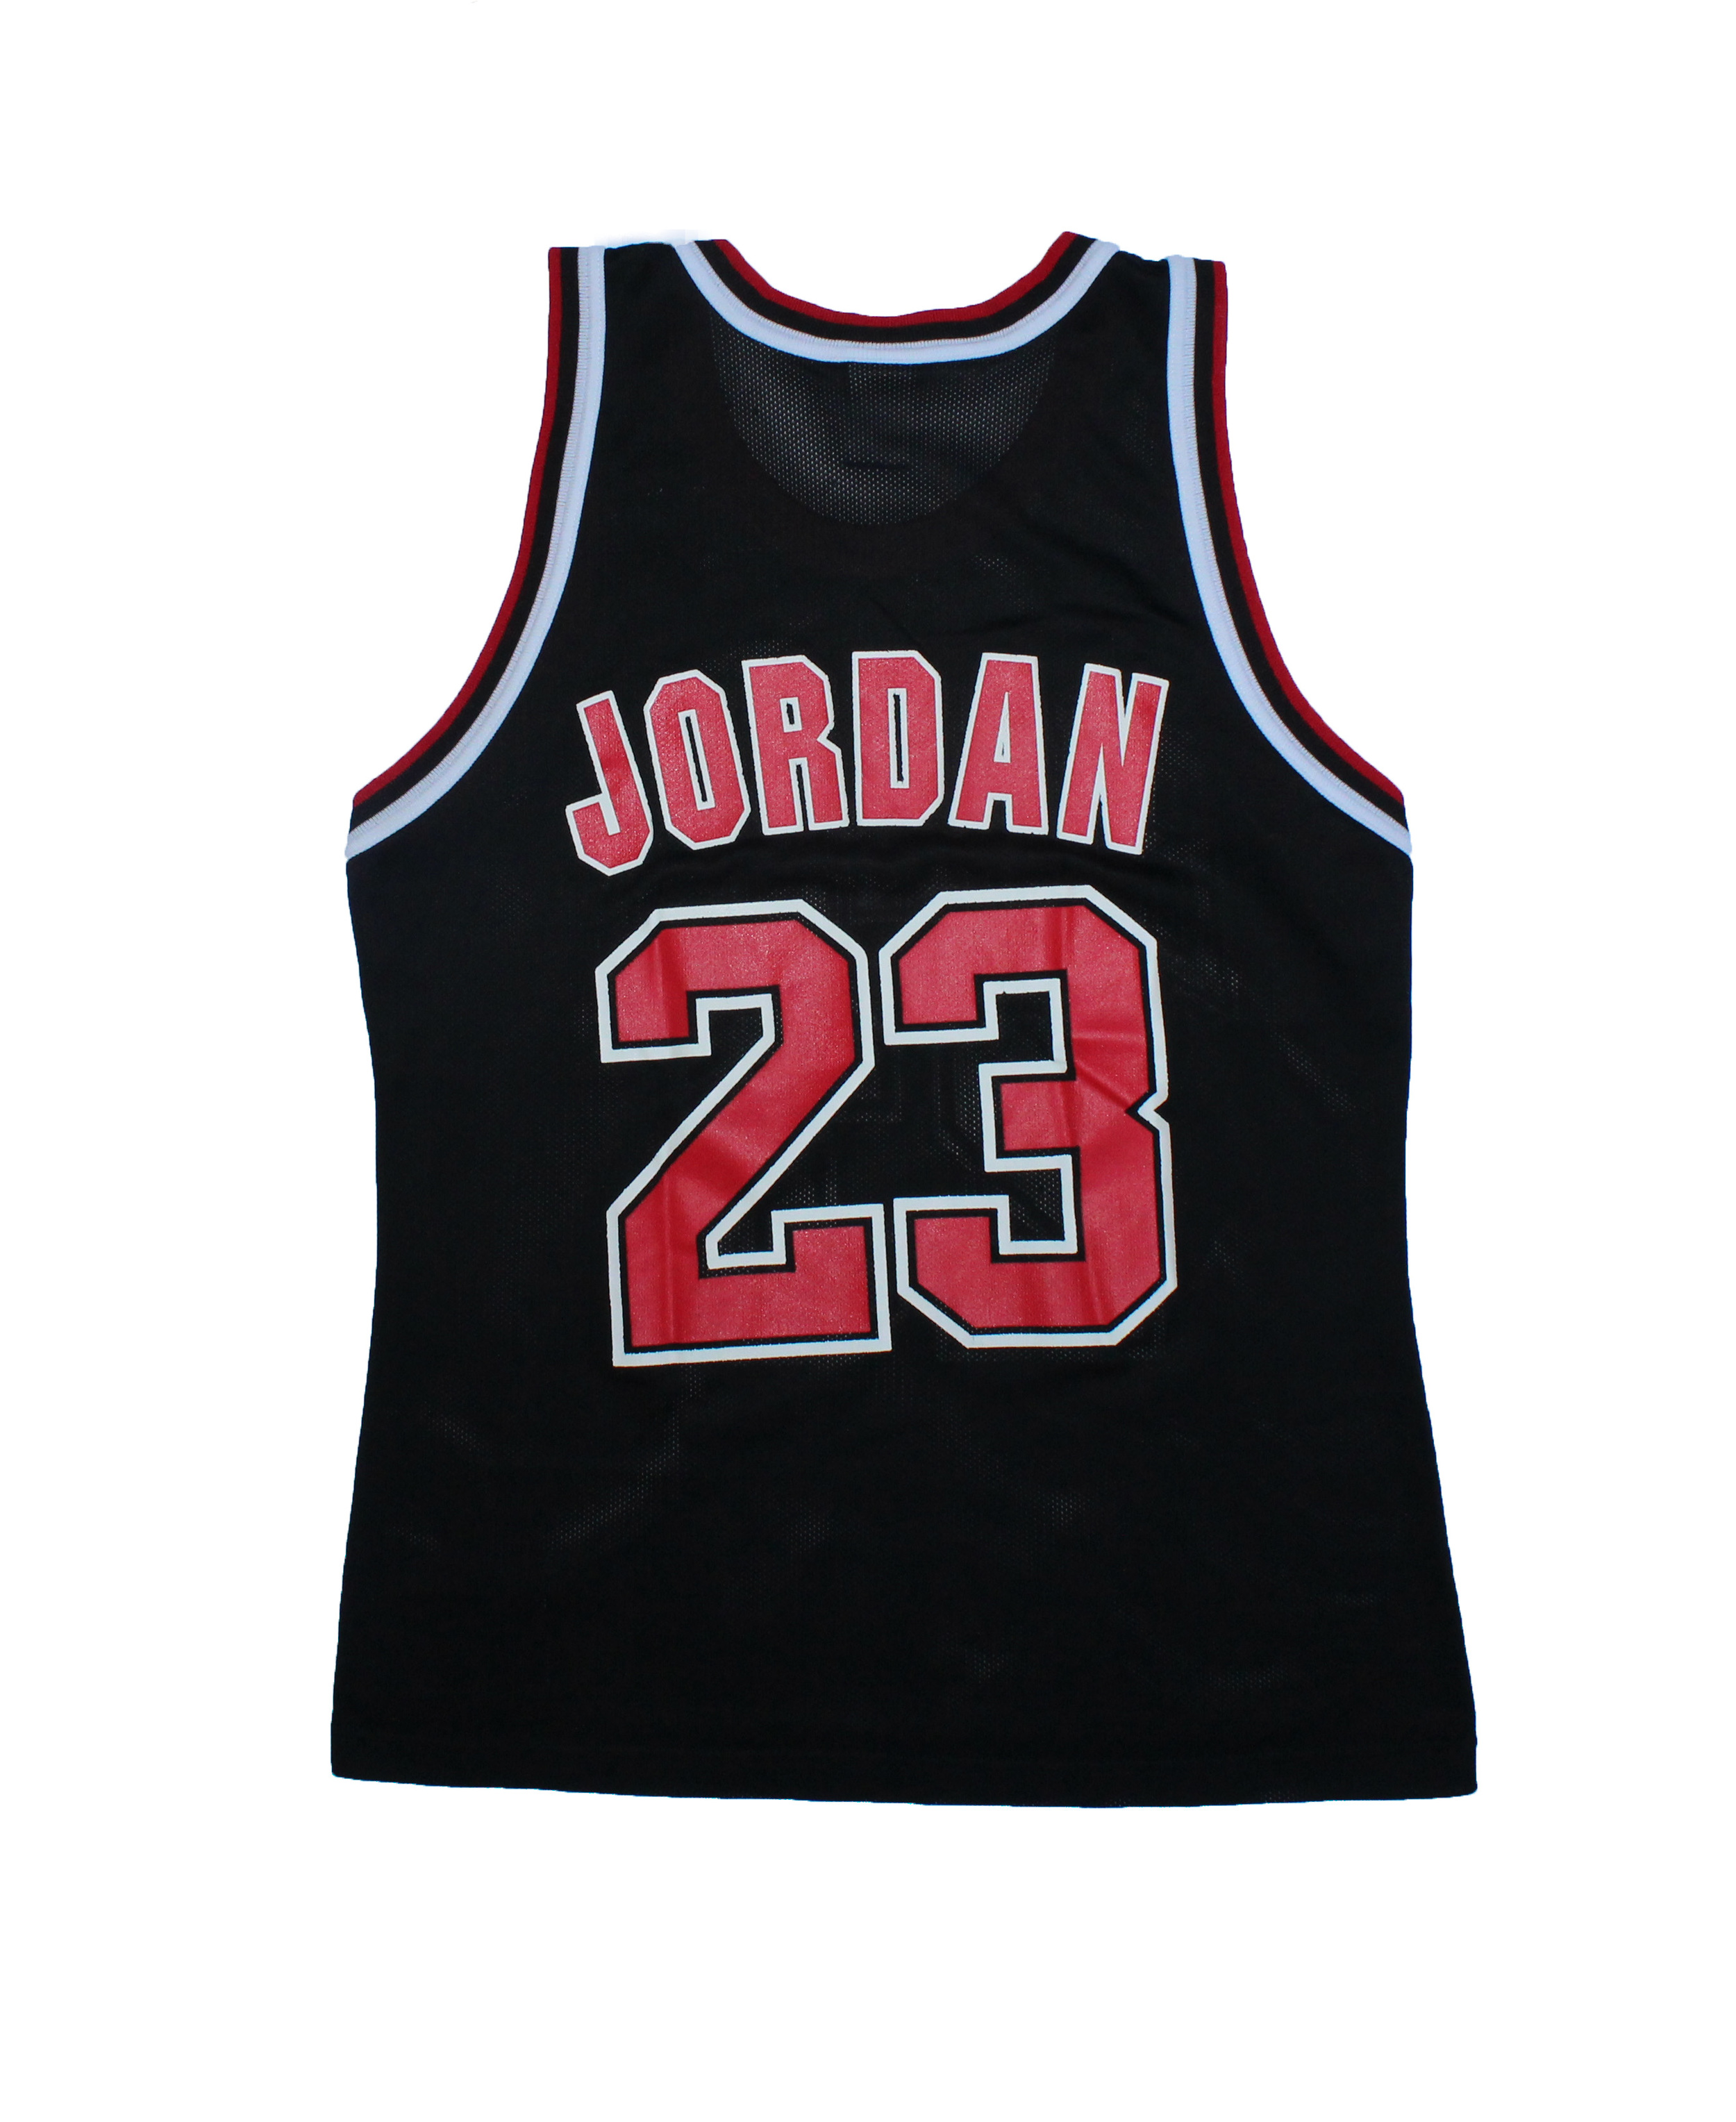 michael jordan jersey black and red